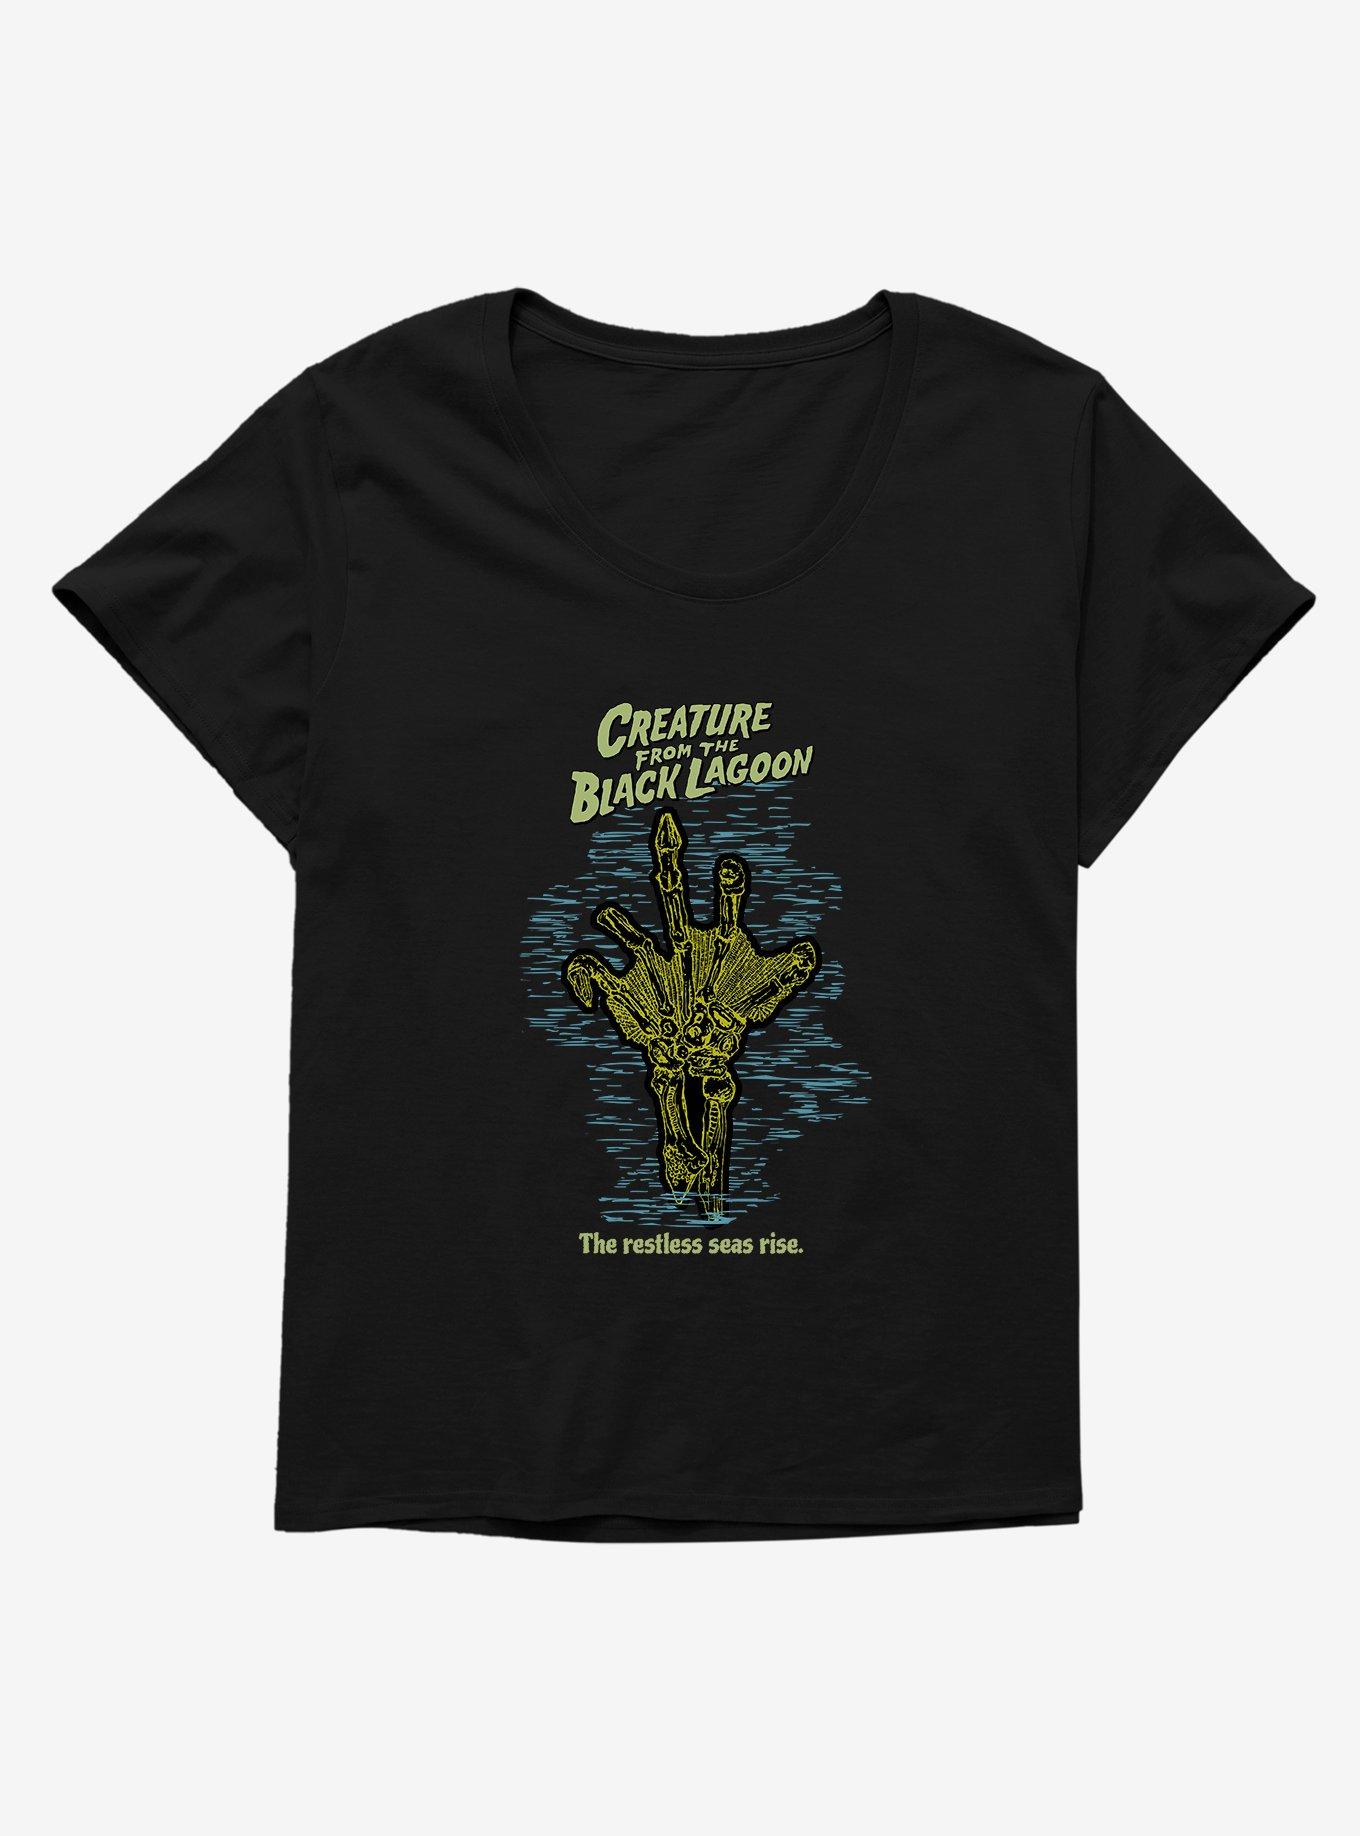 Creature From The Black Lagoon Restless Seas Rise Girls T-Shirt Plus Size, BLACK, hi-res